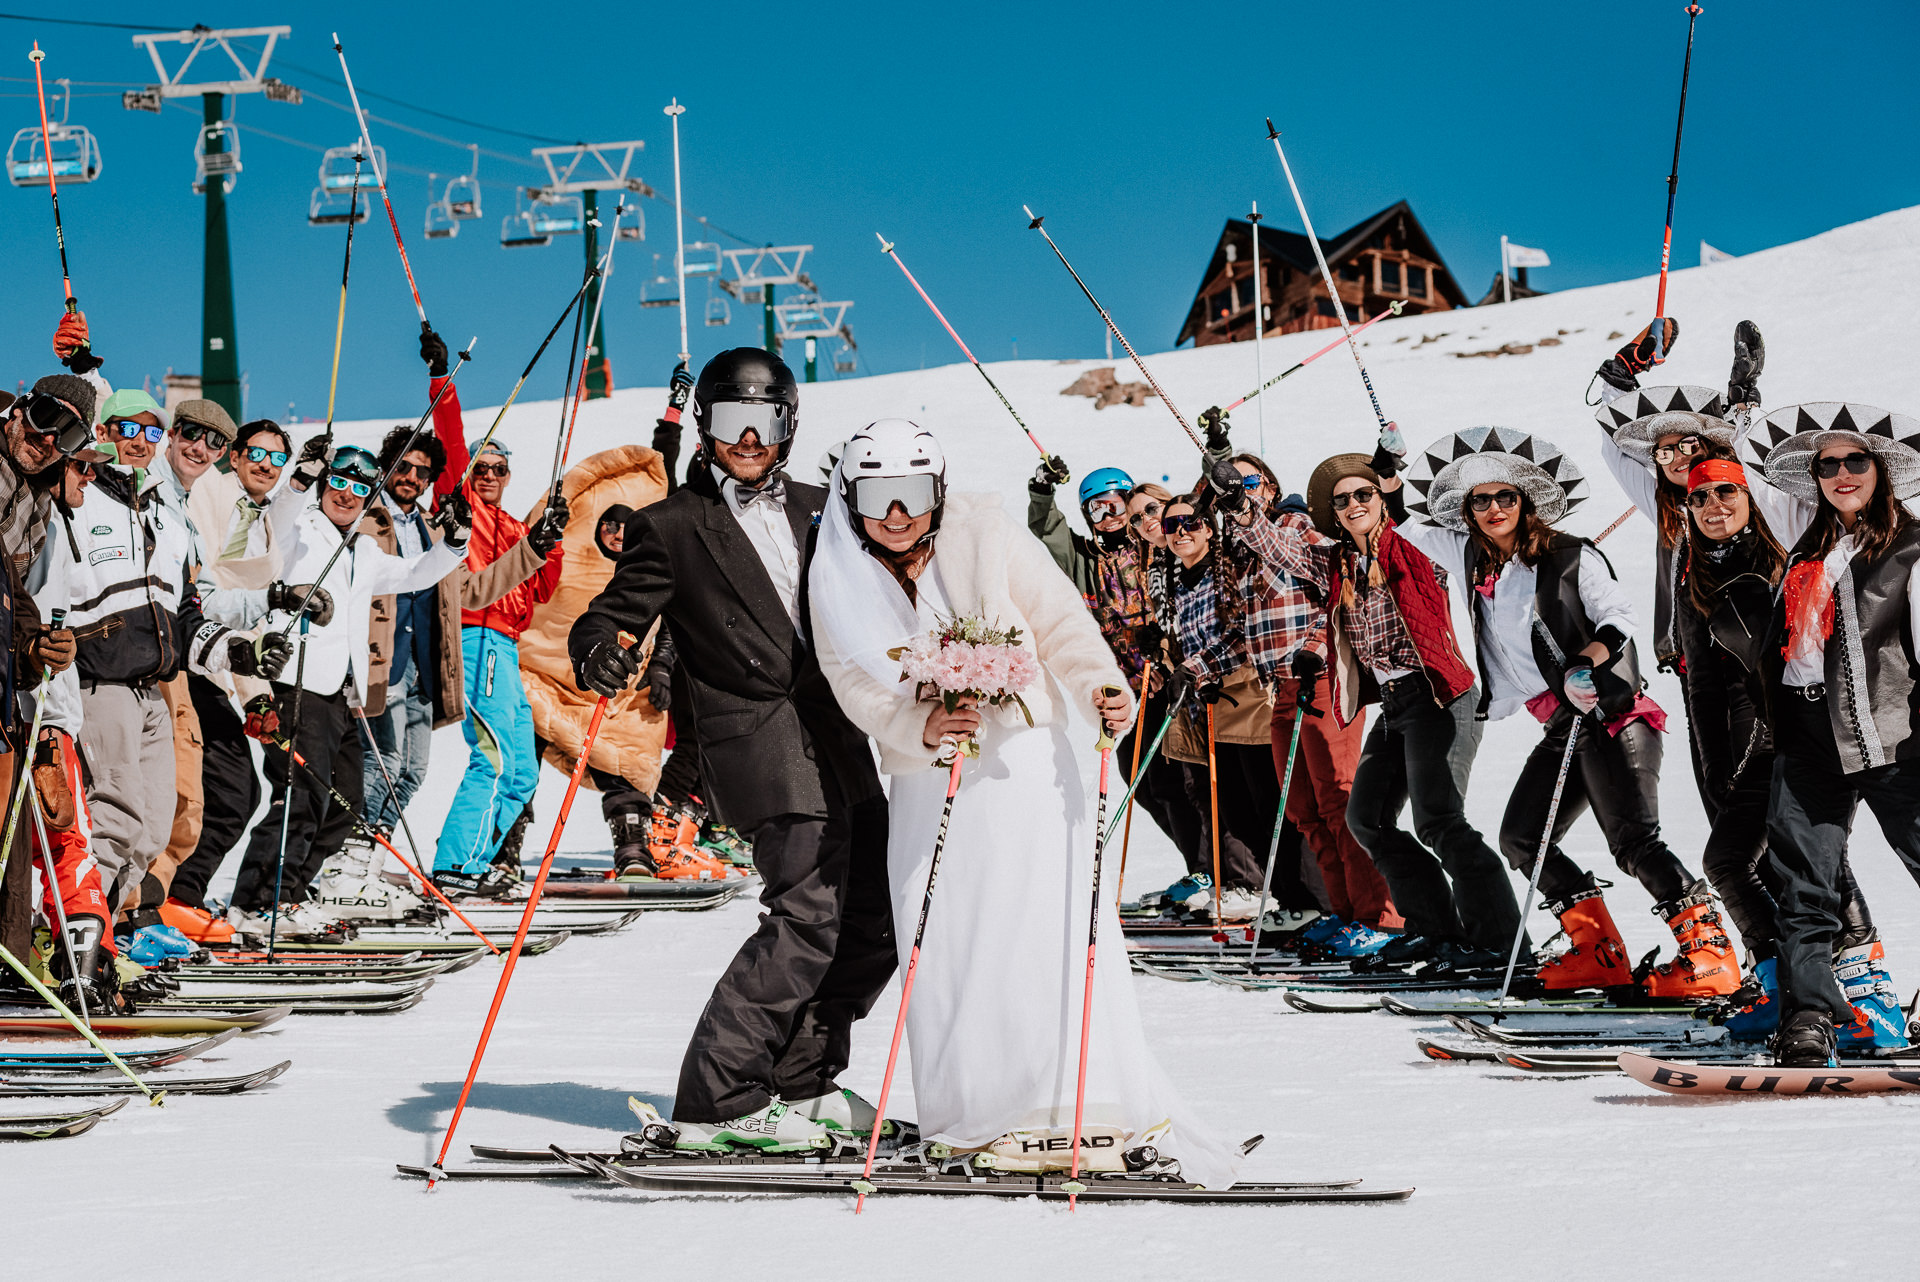 boda esquiadores bariloche nieve